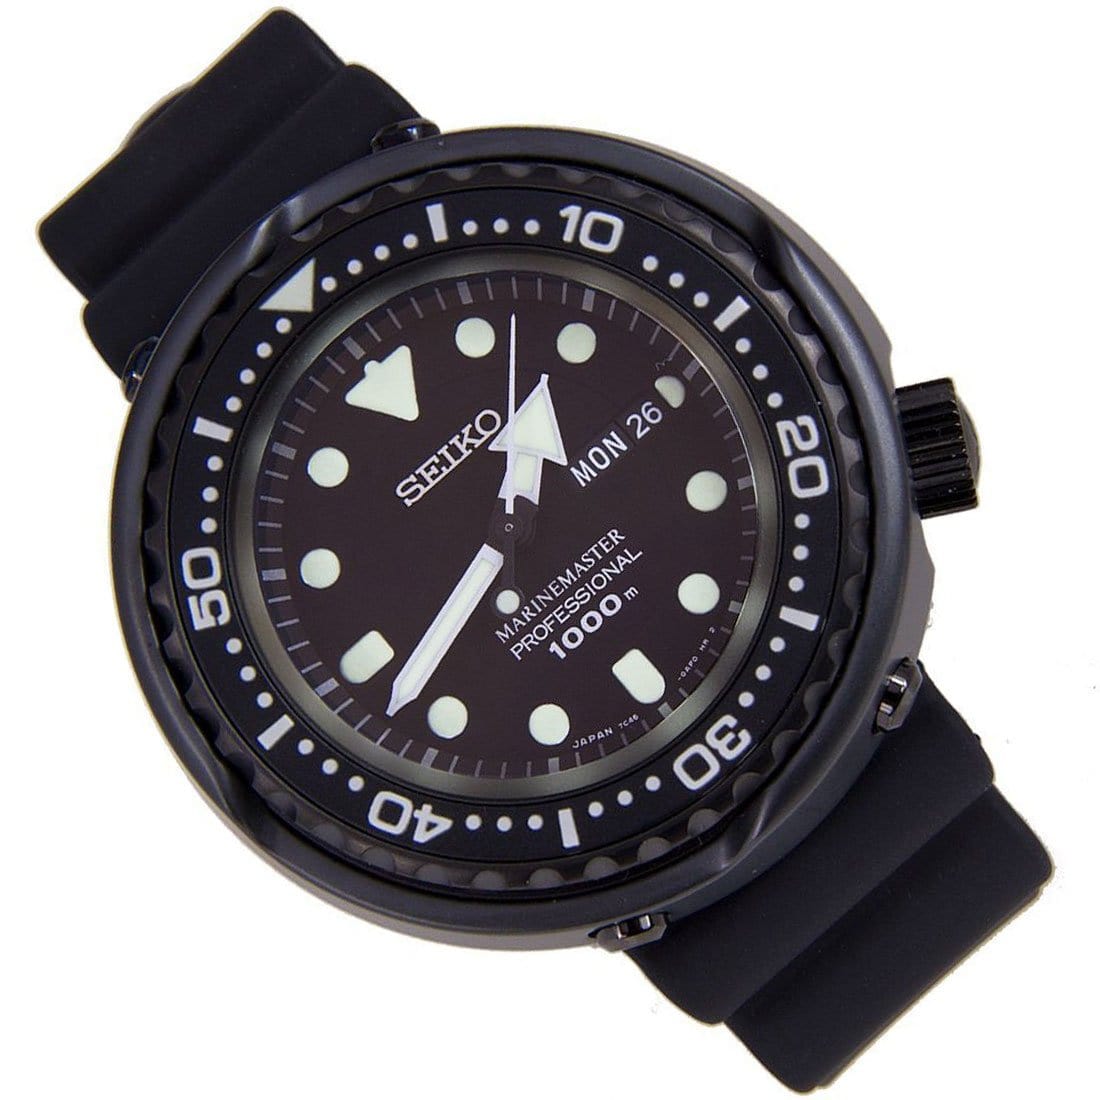 SBBN025 Seiko PROSPEX Marine Master Professional1000m Dive JDM Watch